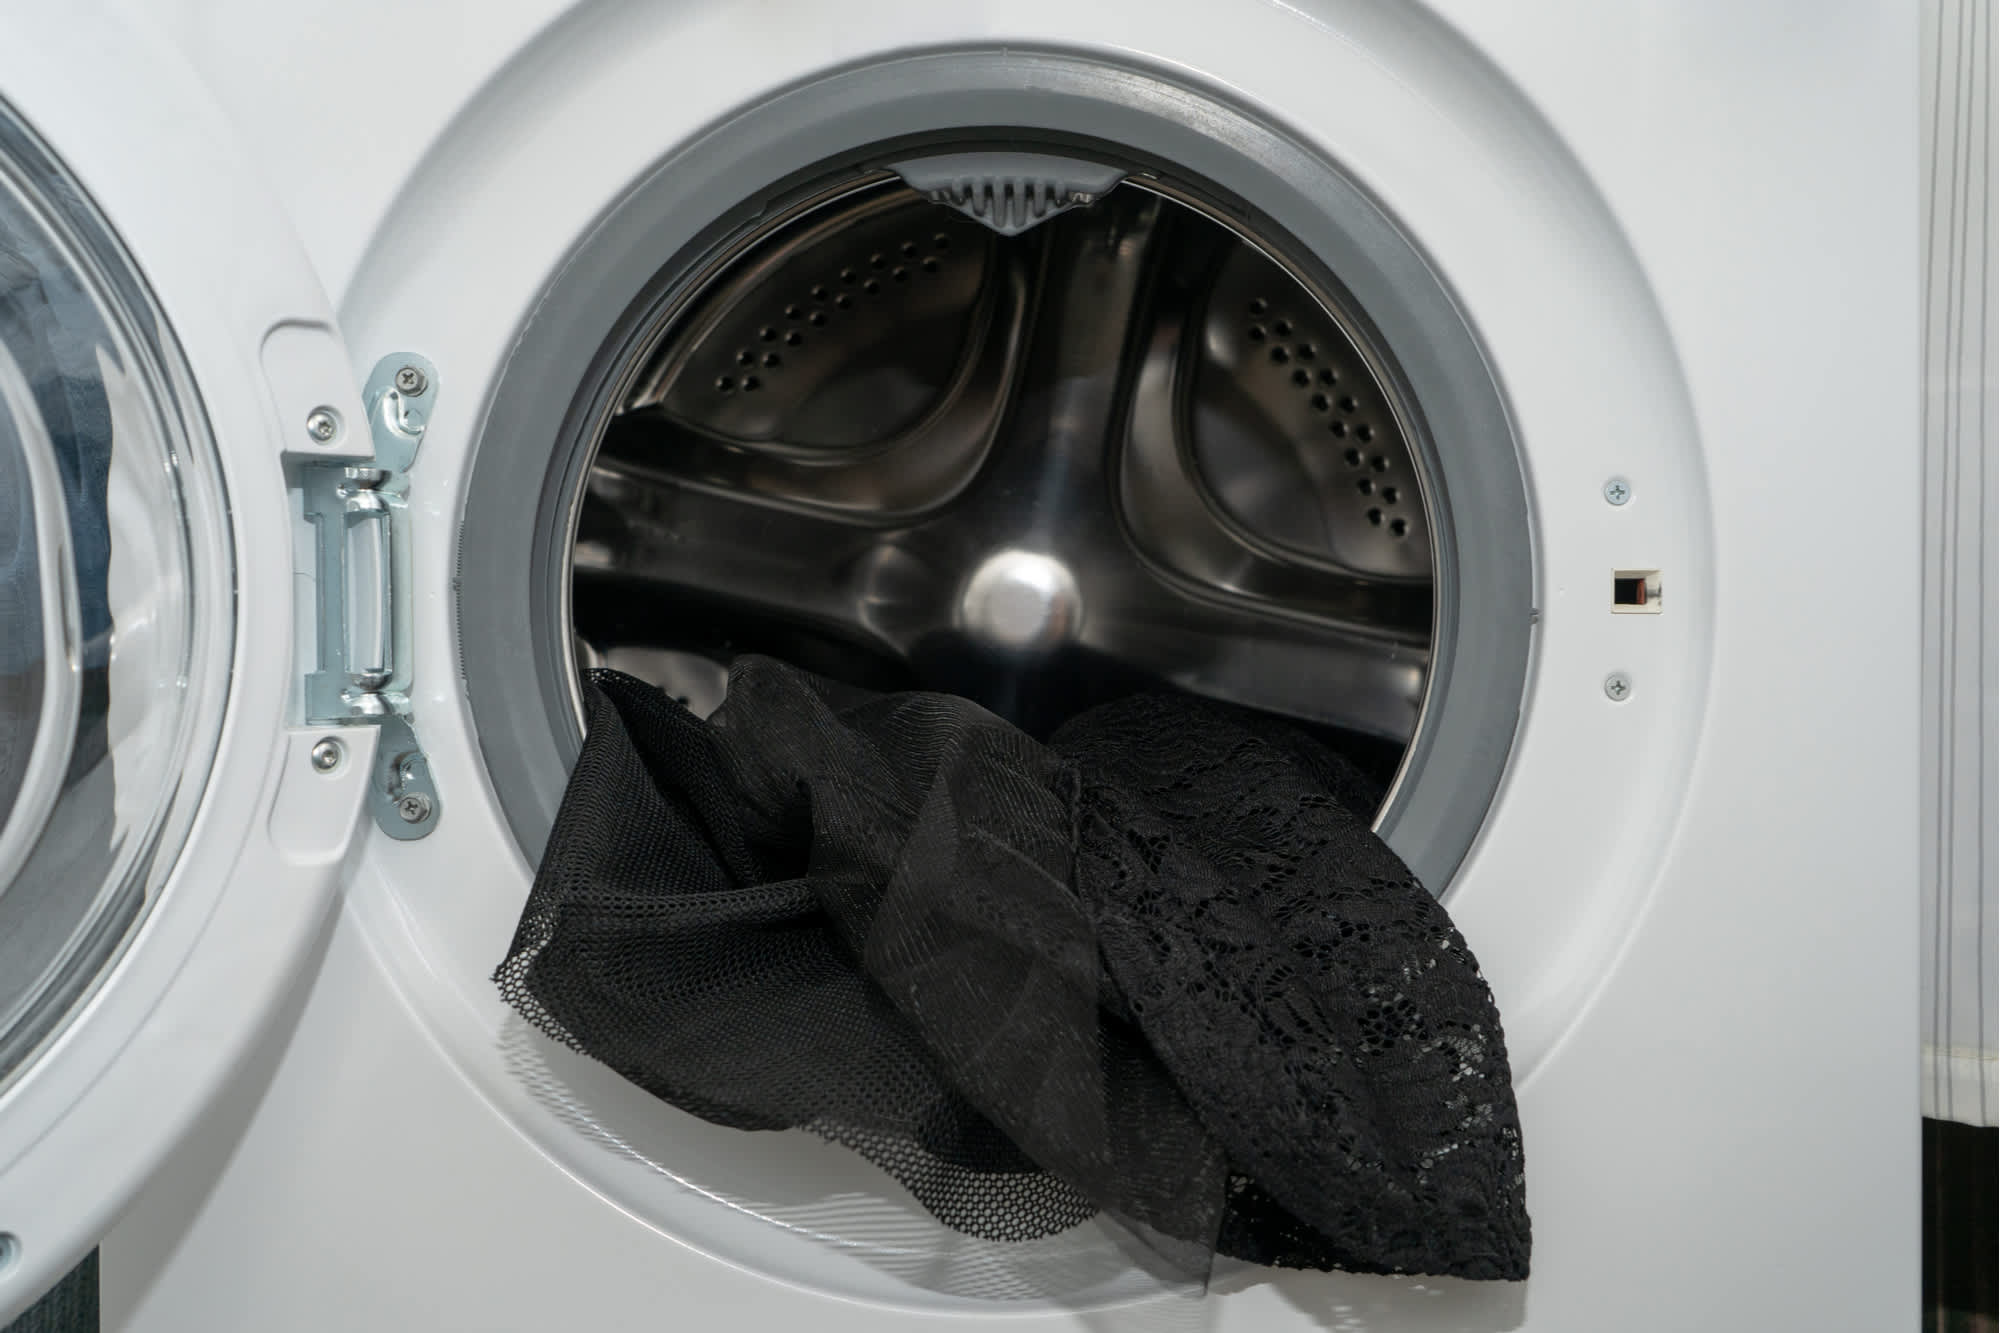 https://cdn.apartmenttherapy.info/image/upload/v1586802134/dry-clean-machine-wash.jpg